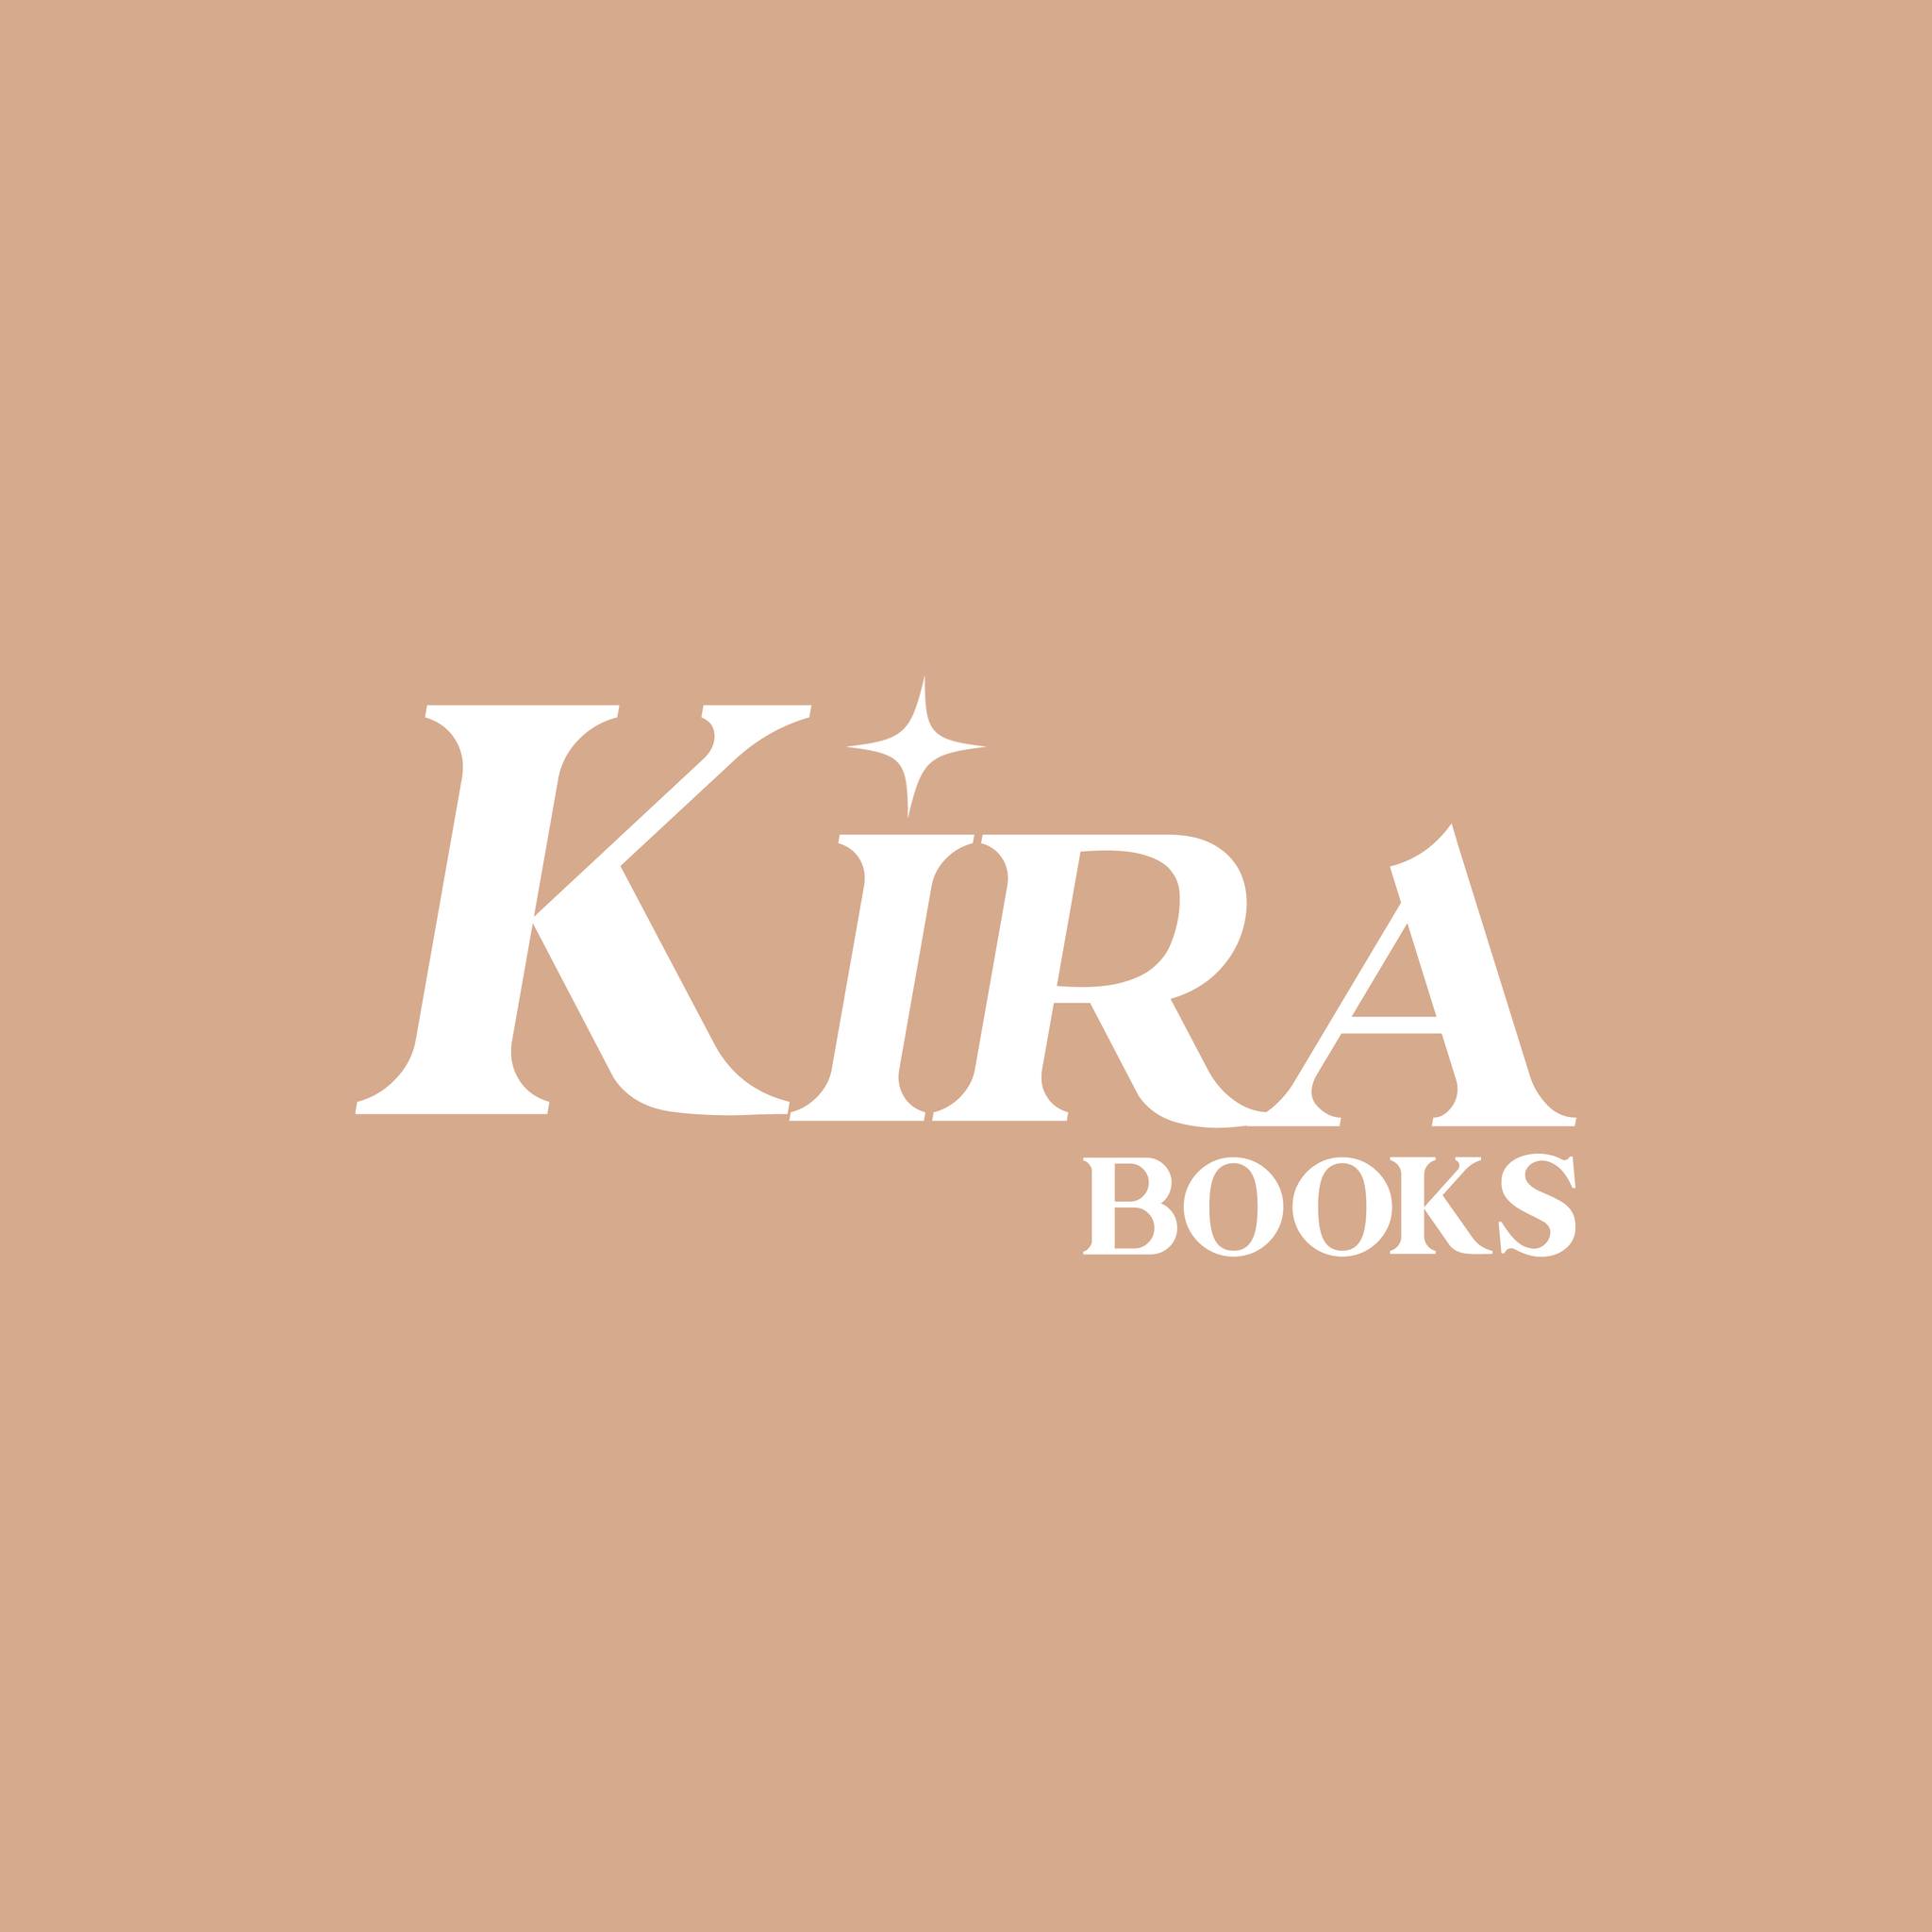 Kira Books